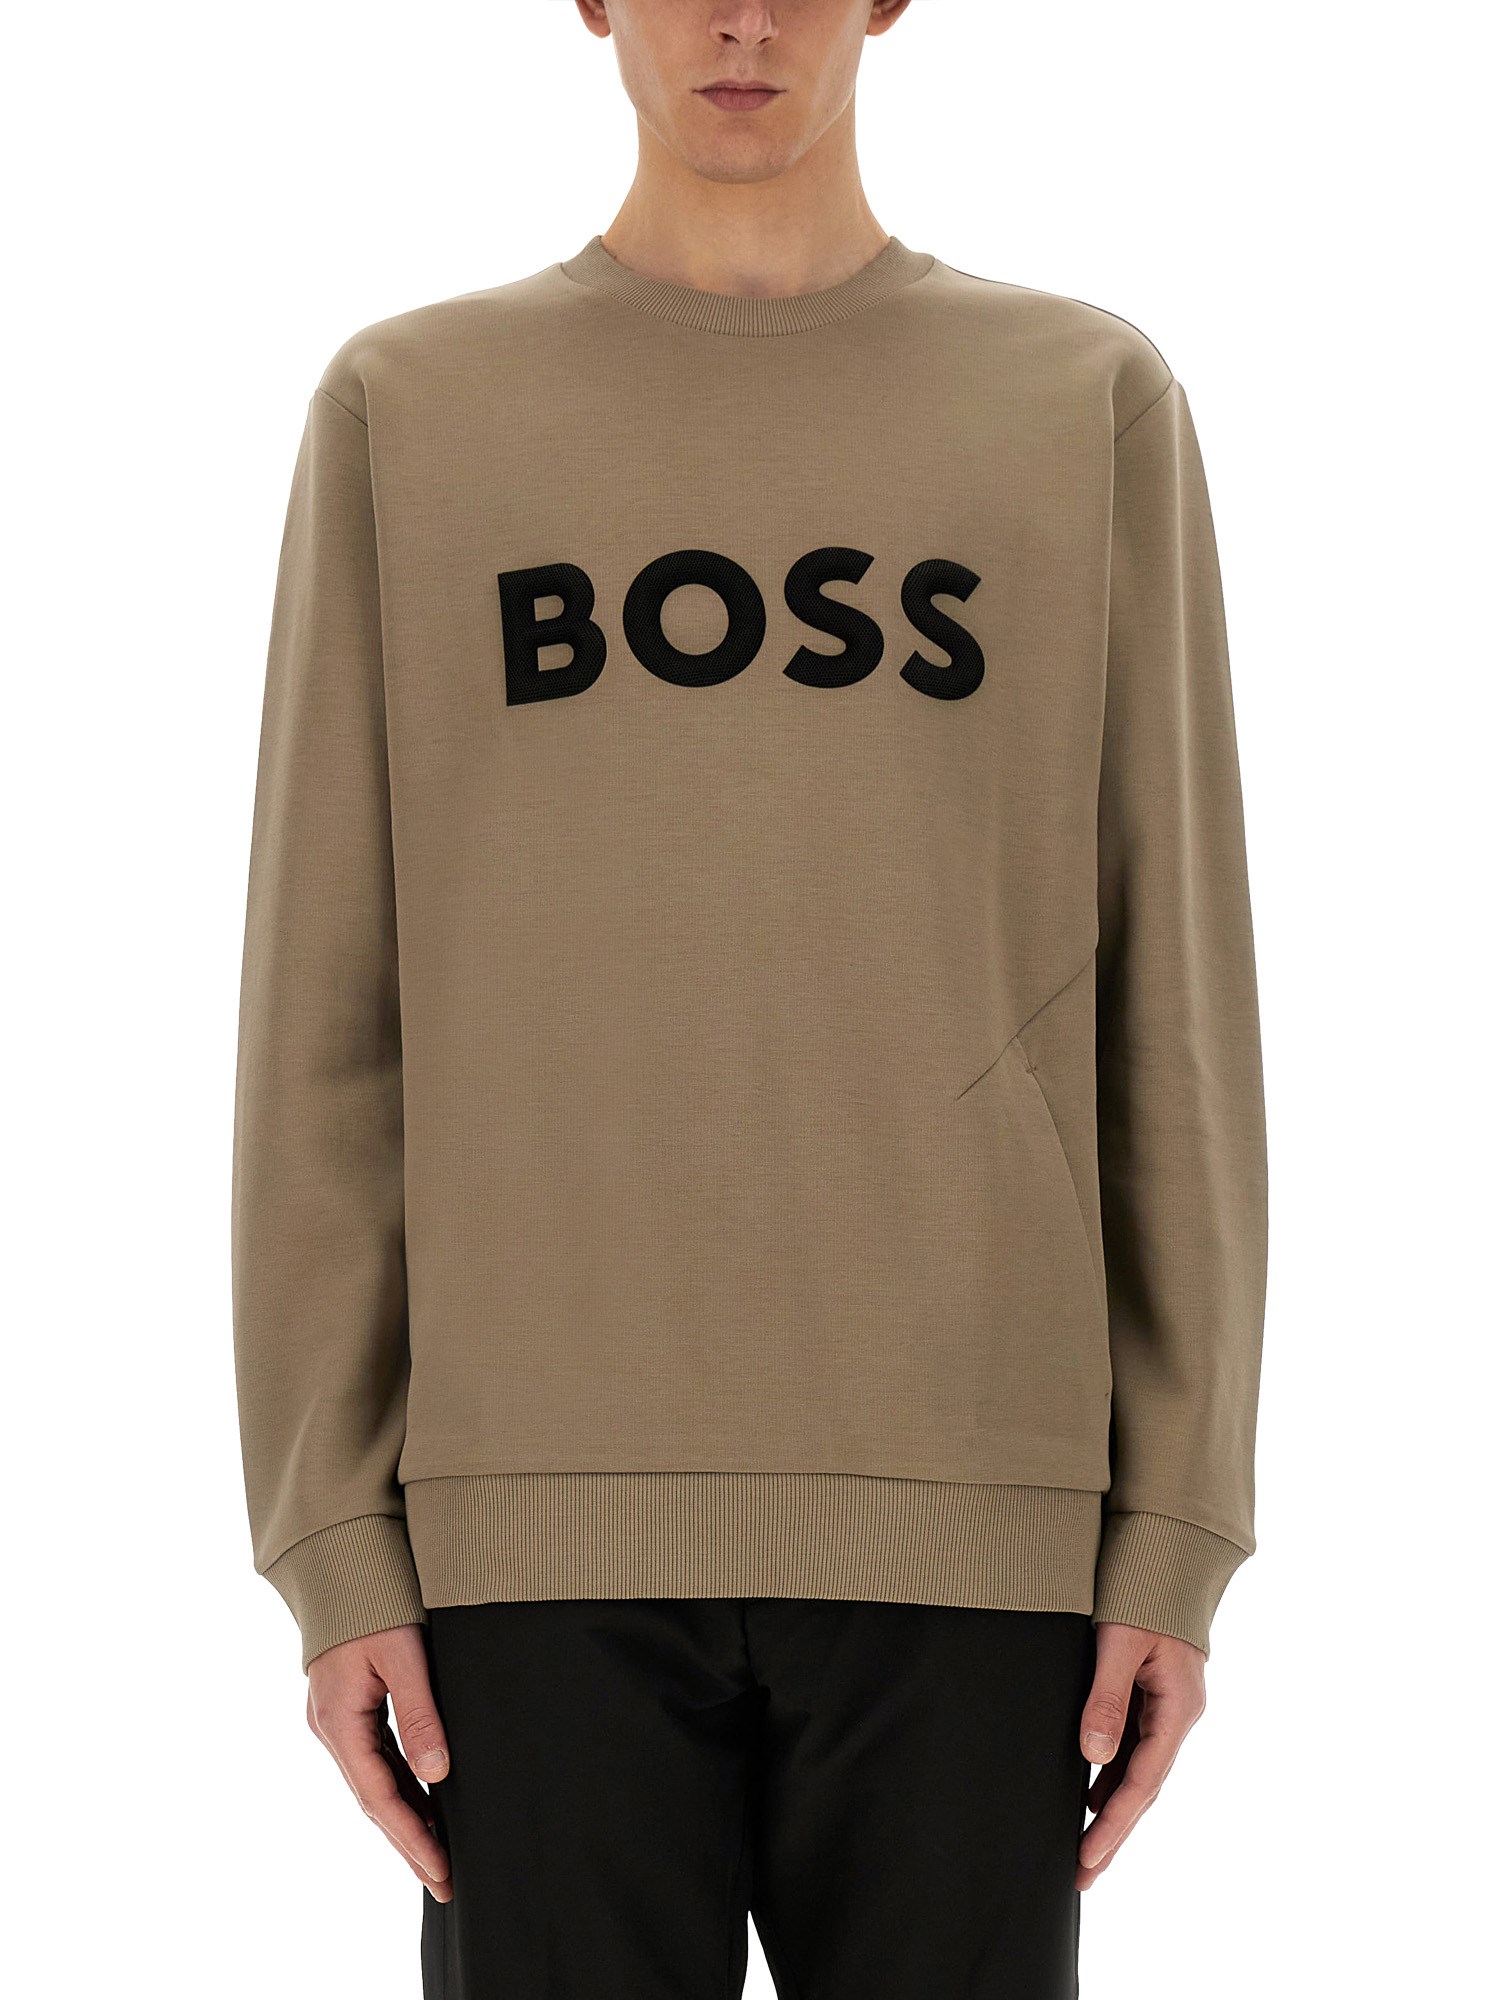 BOSS boss sweatshirt with logo